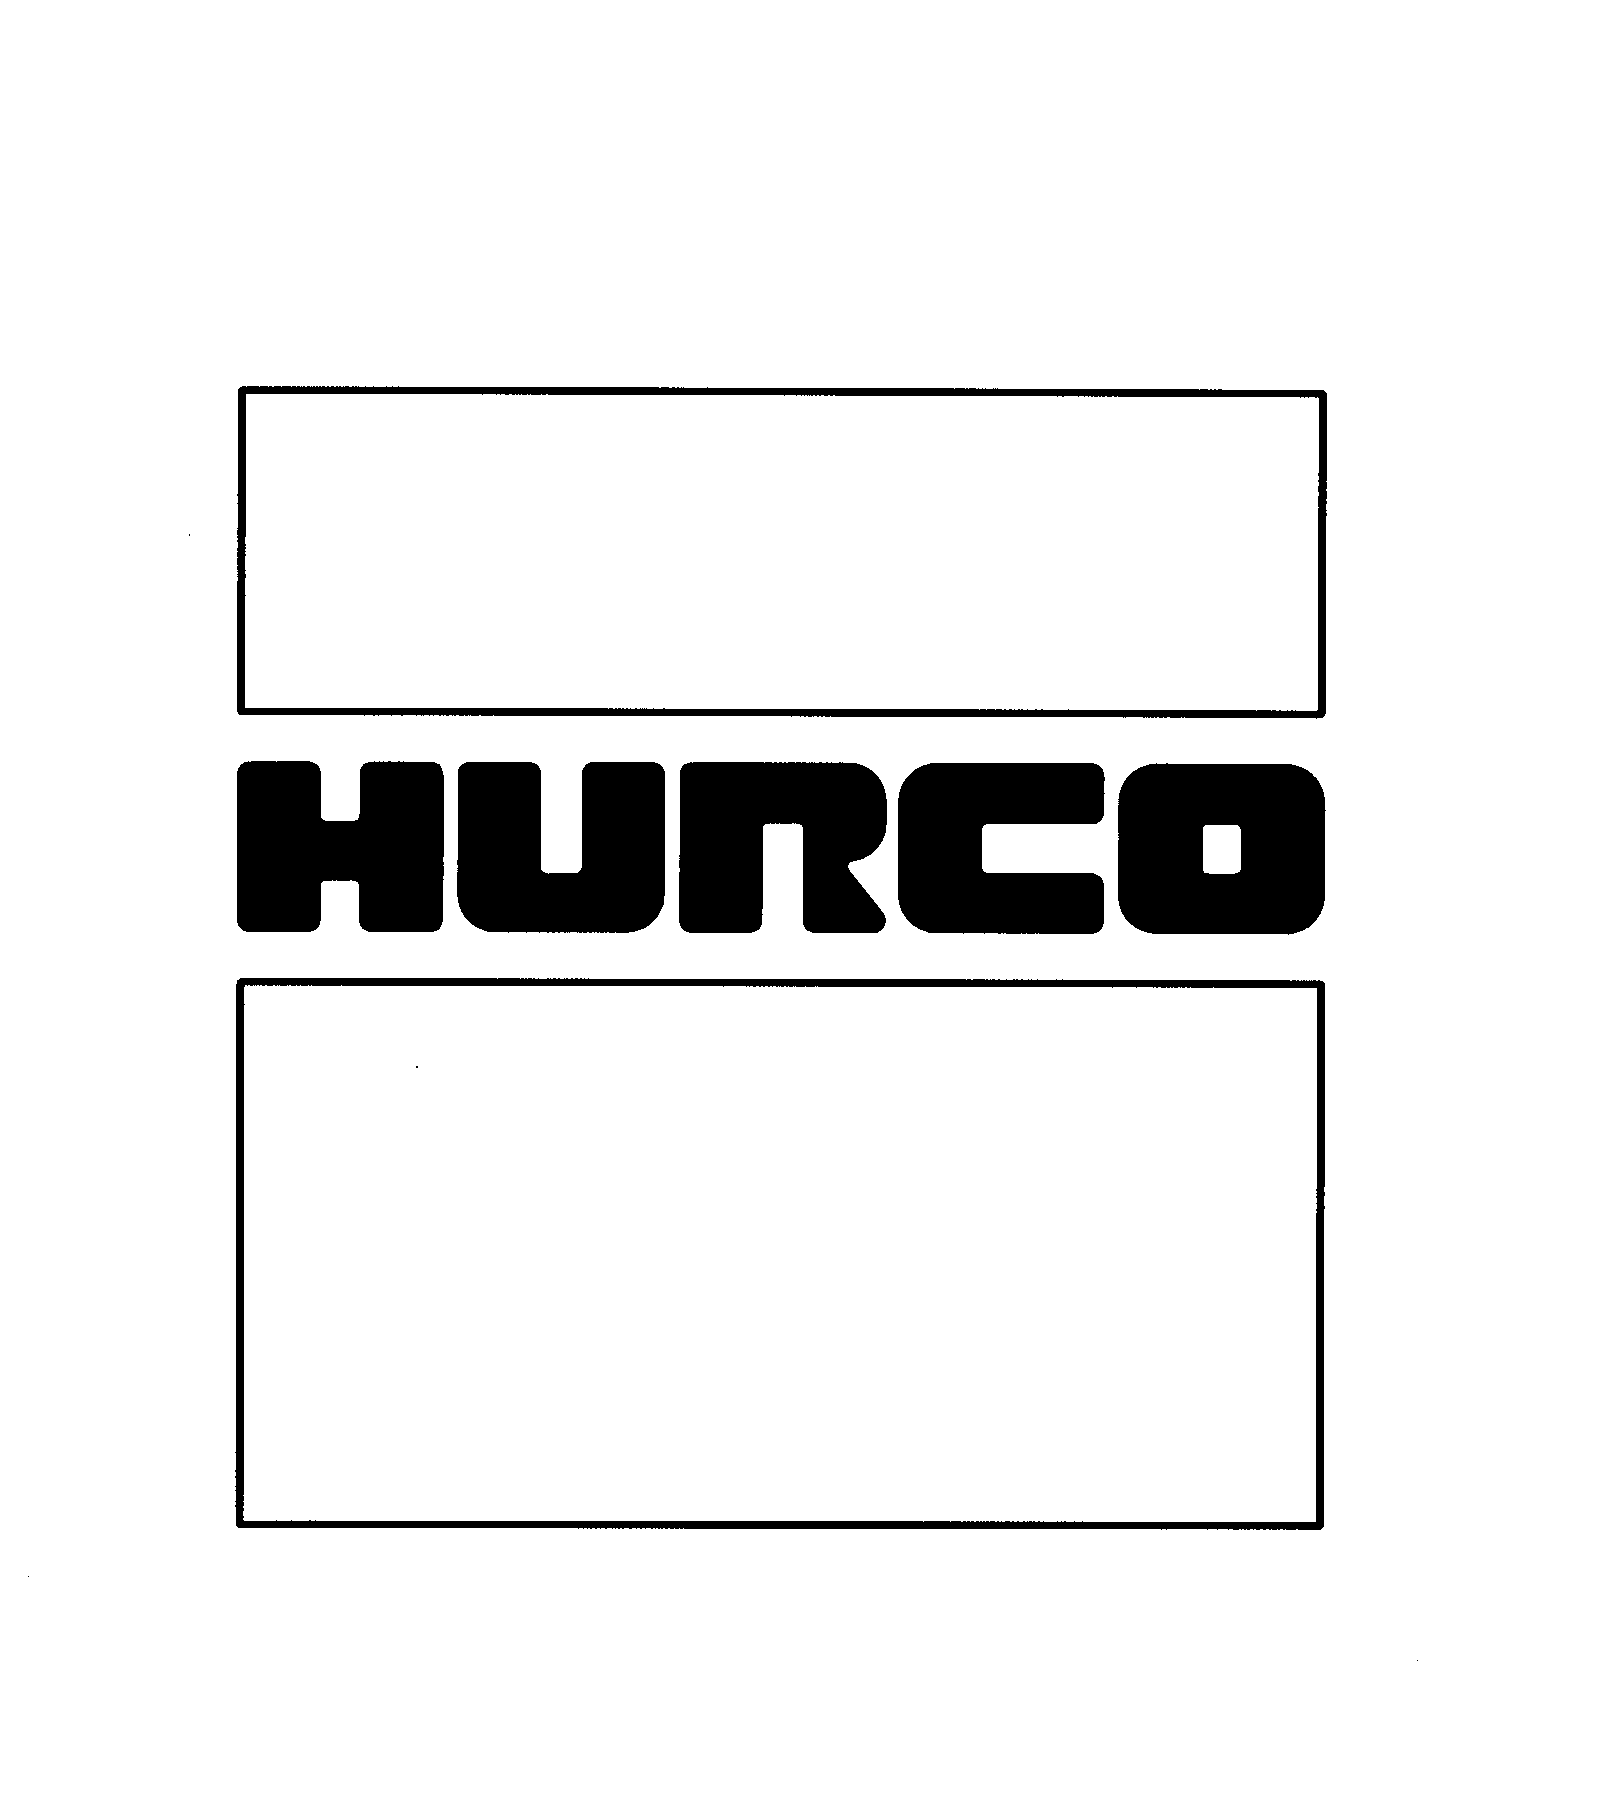 HURCO